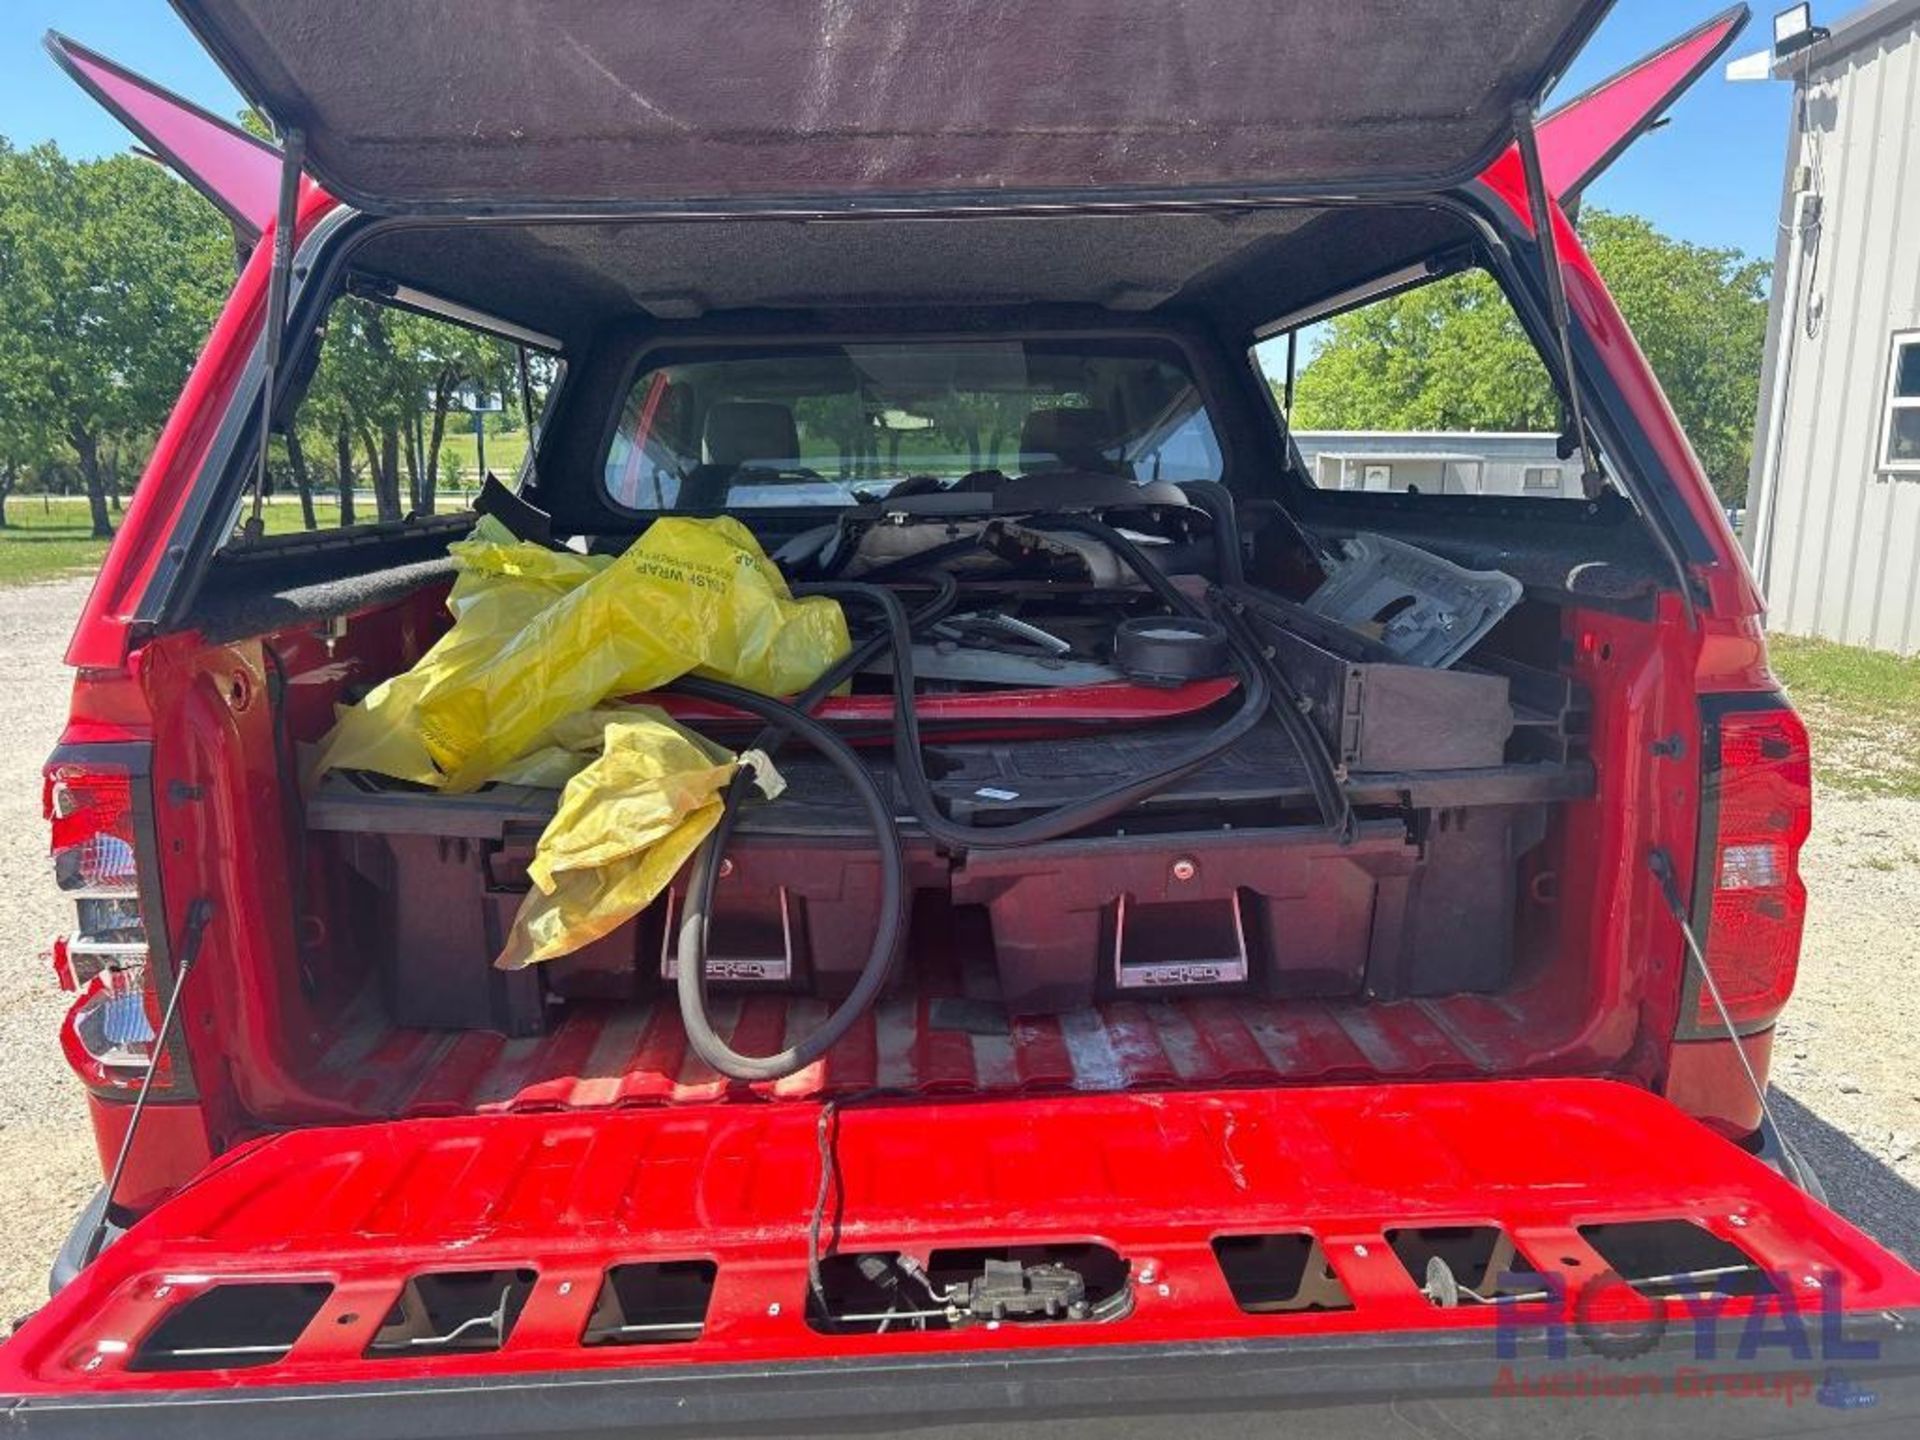 2018 Chevrolet Silverado Crew Cab Pickup Truck - Image 31 of 43